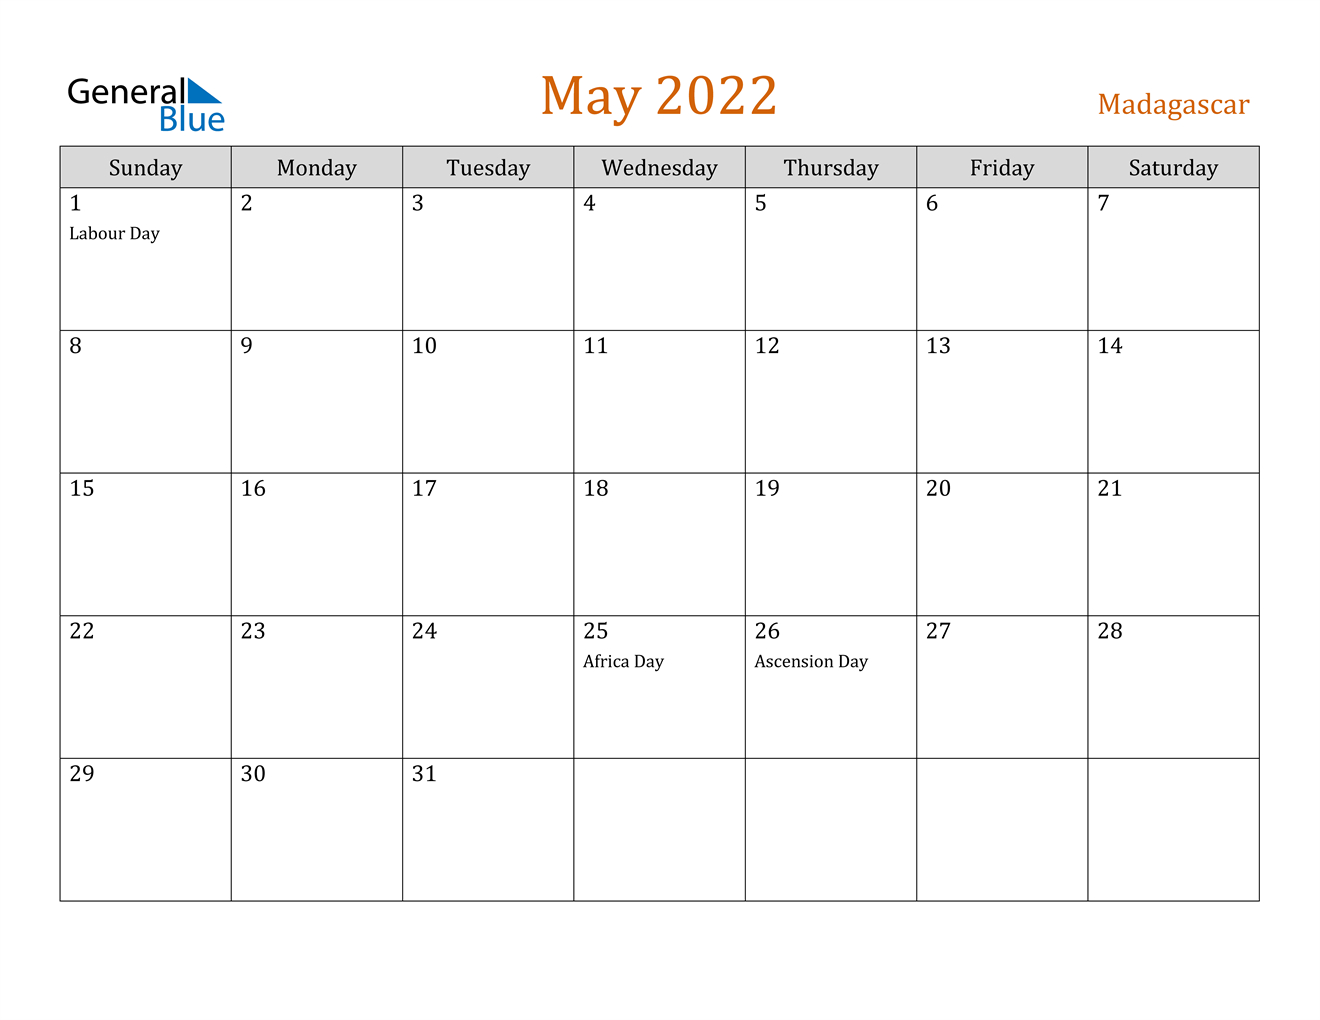 Madagascar May 2022 Calendar With Holidays